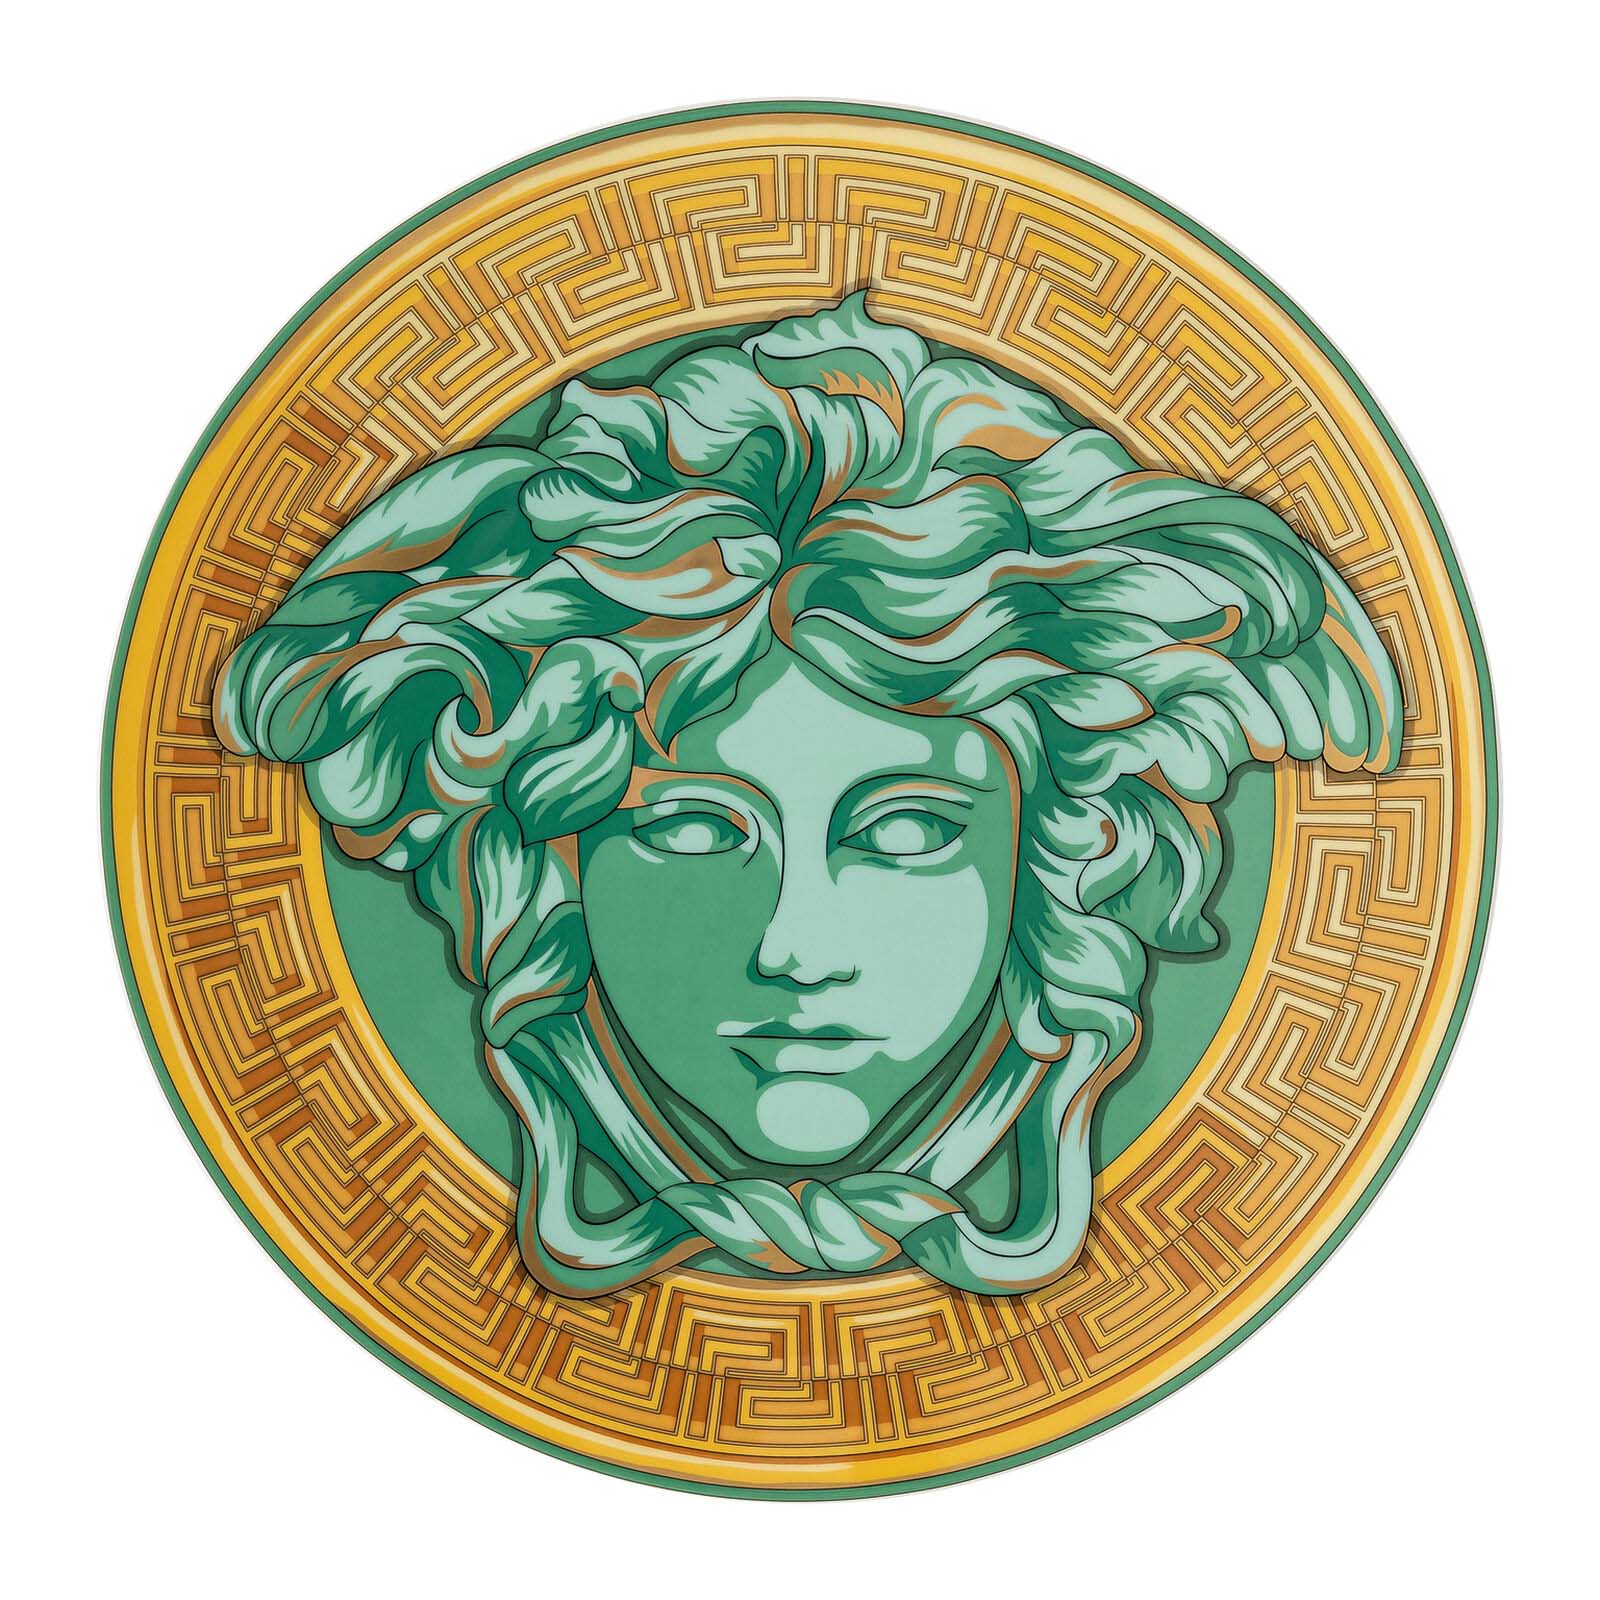  MEDUSA AMPLIFIED 绿色硬币盘的图片
